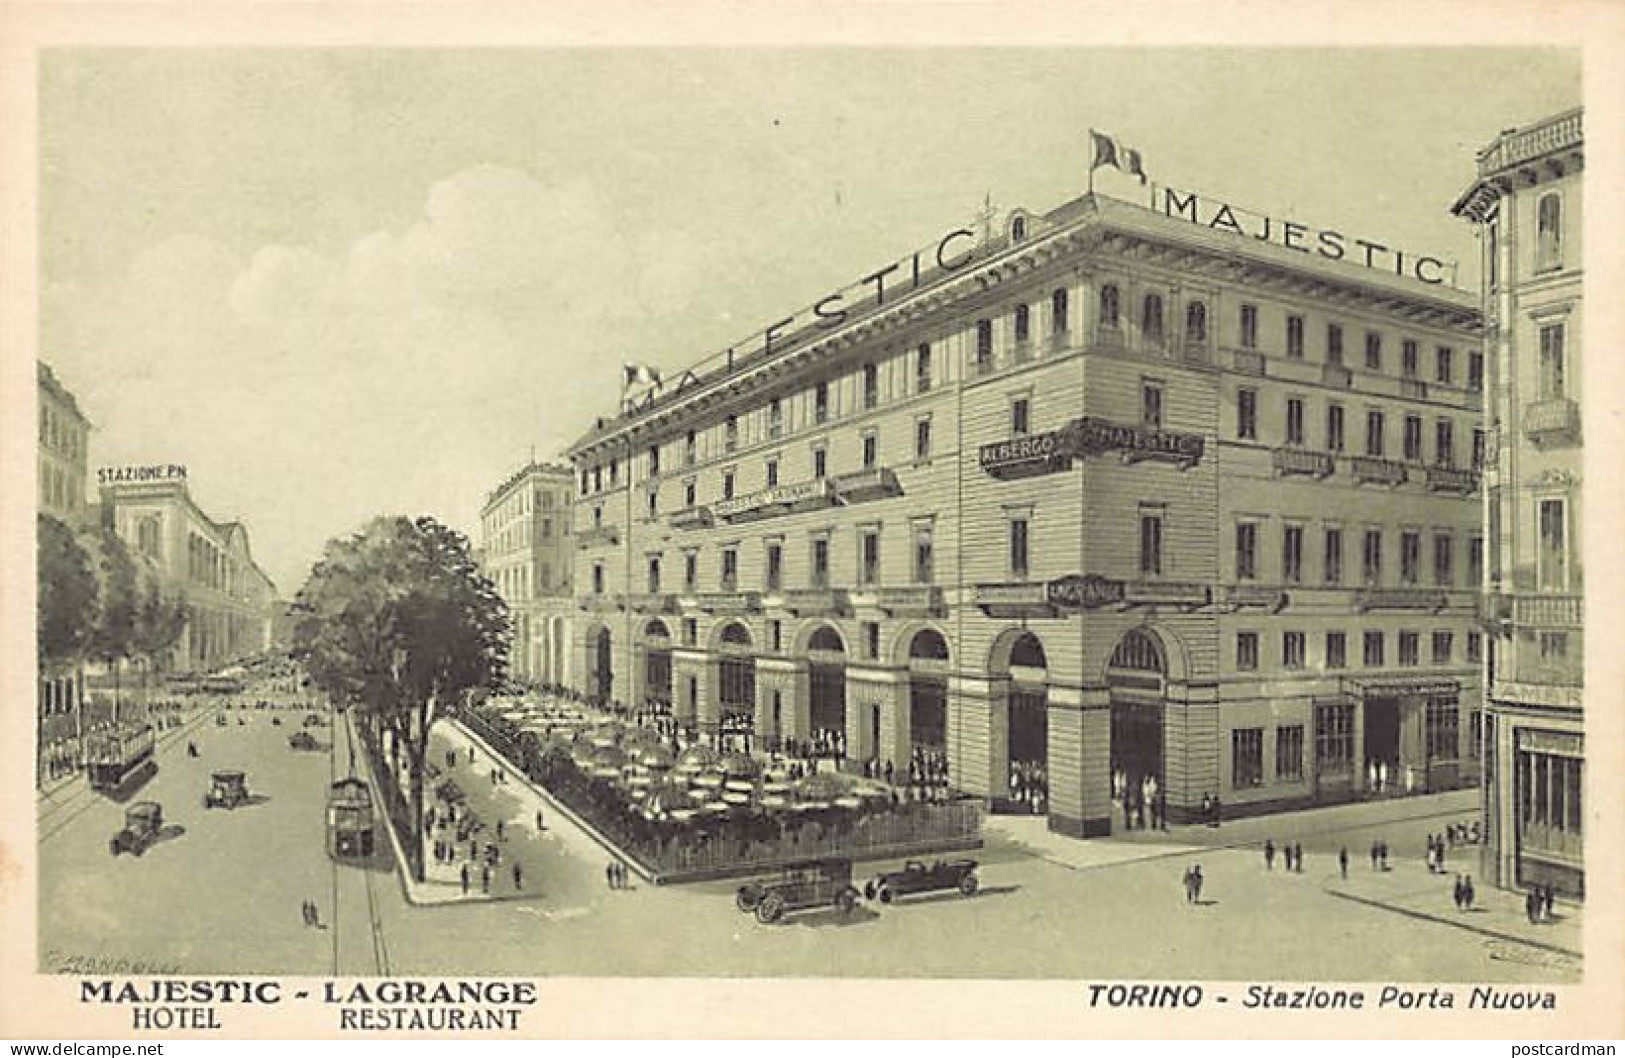  TORINO - Hotel Majestic Lagrange - Stazione Porta Nuova - Cafes, Hotels & Restaurants